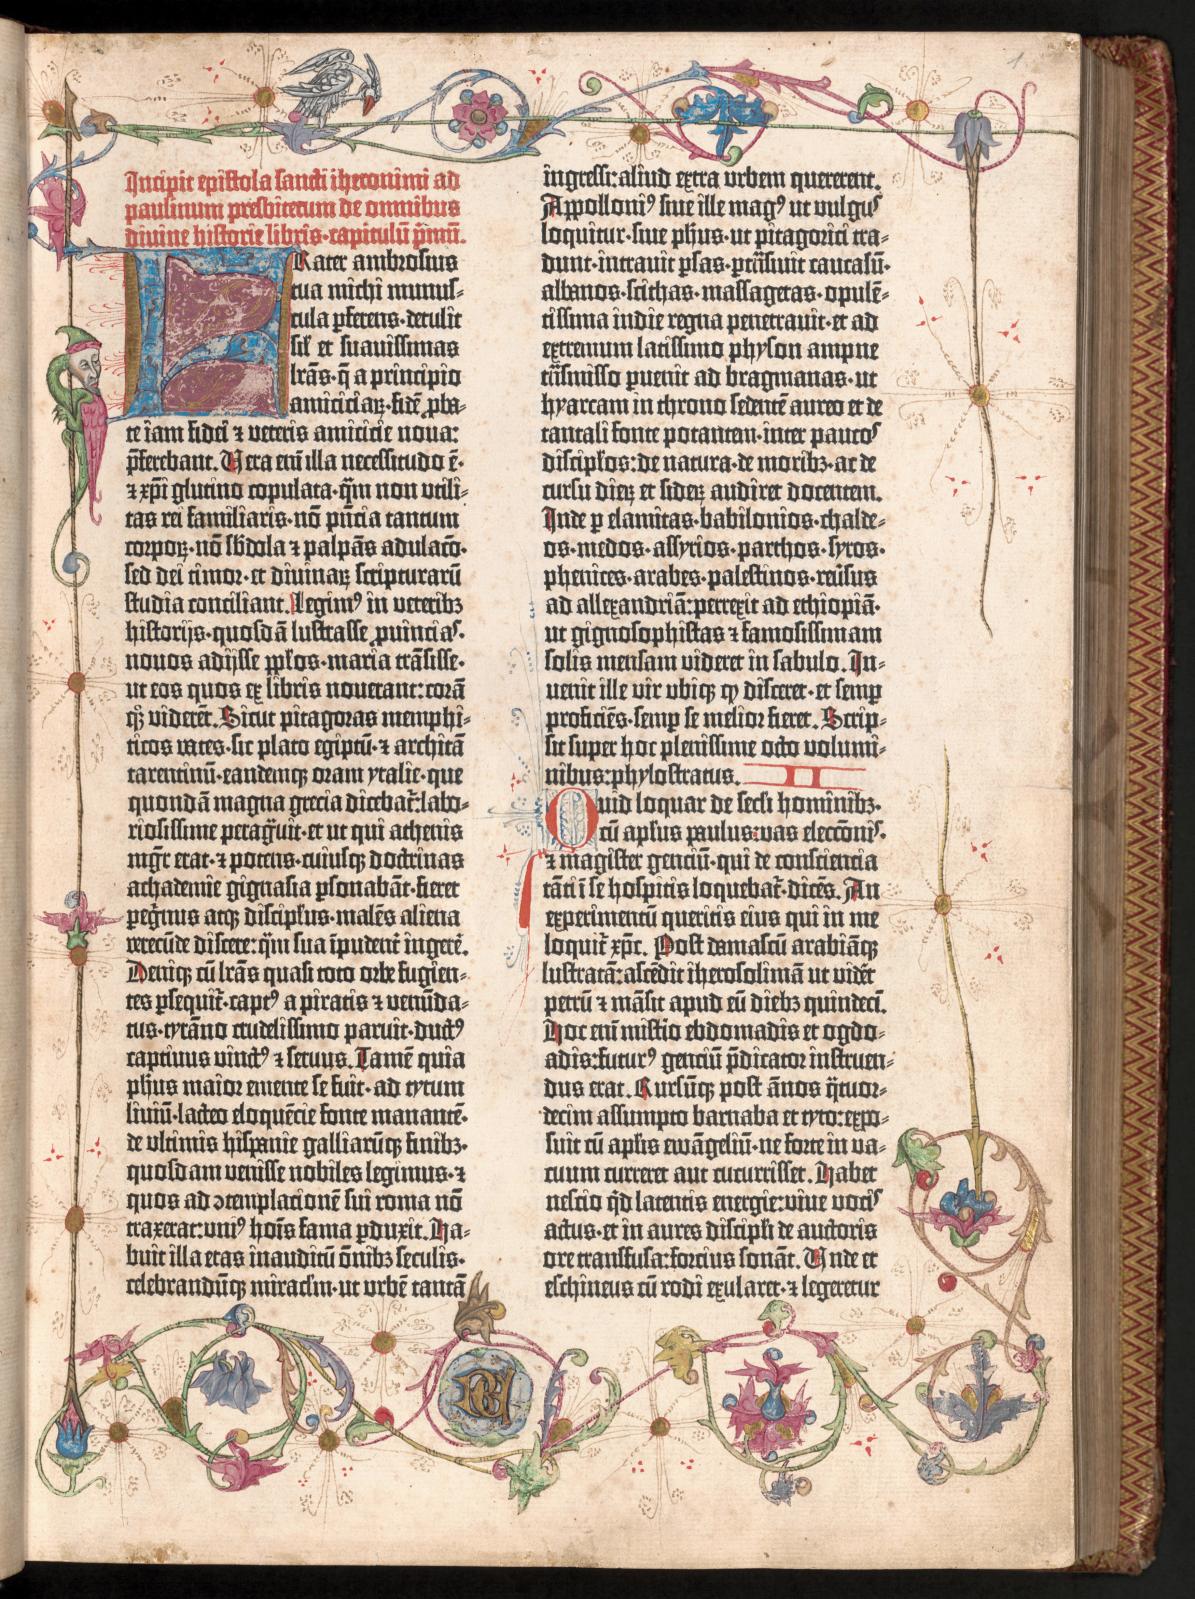 Bible de Gutenberg, imprimée par Johannes Gutenberg, vers 1454.